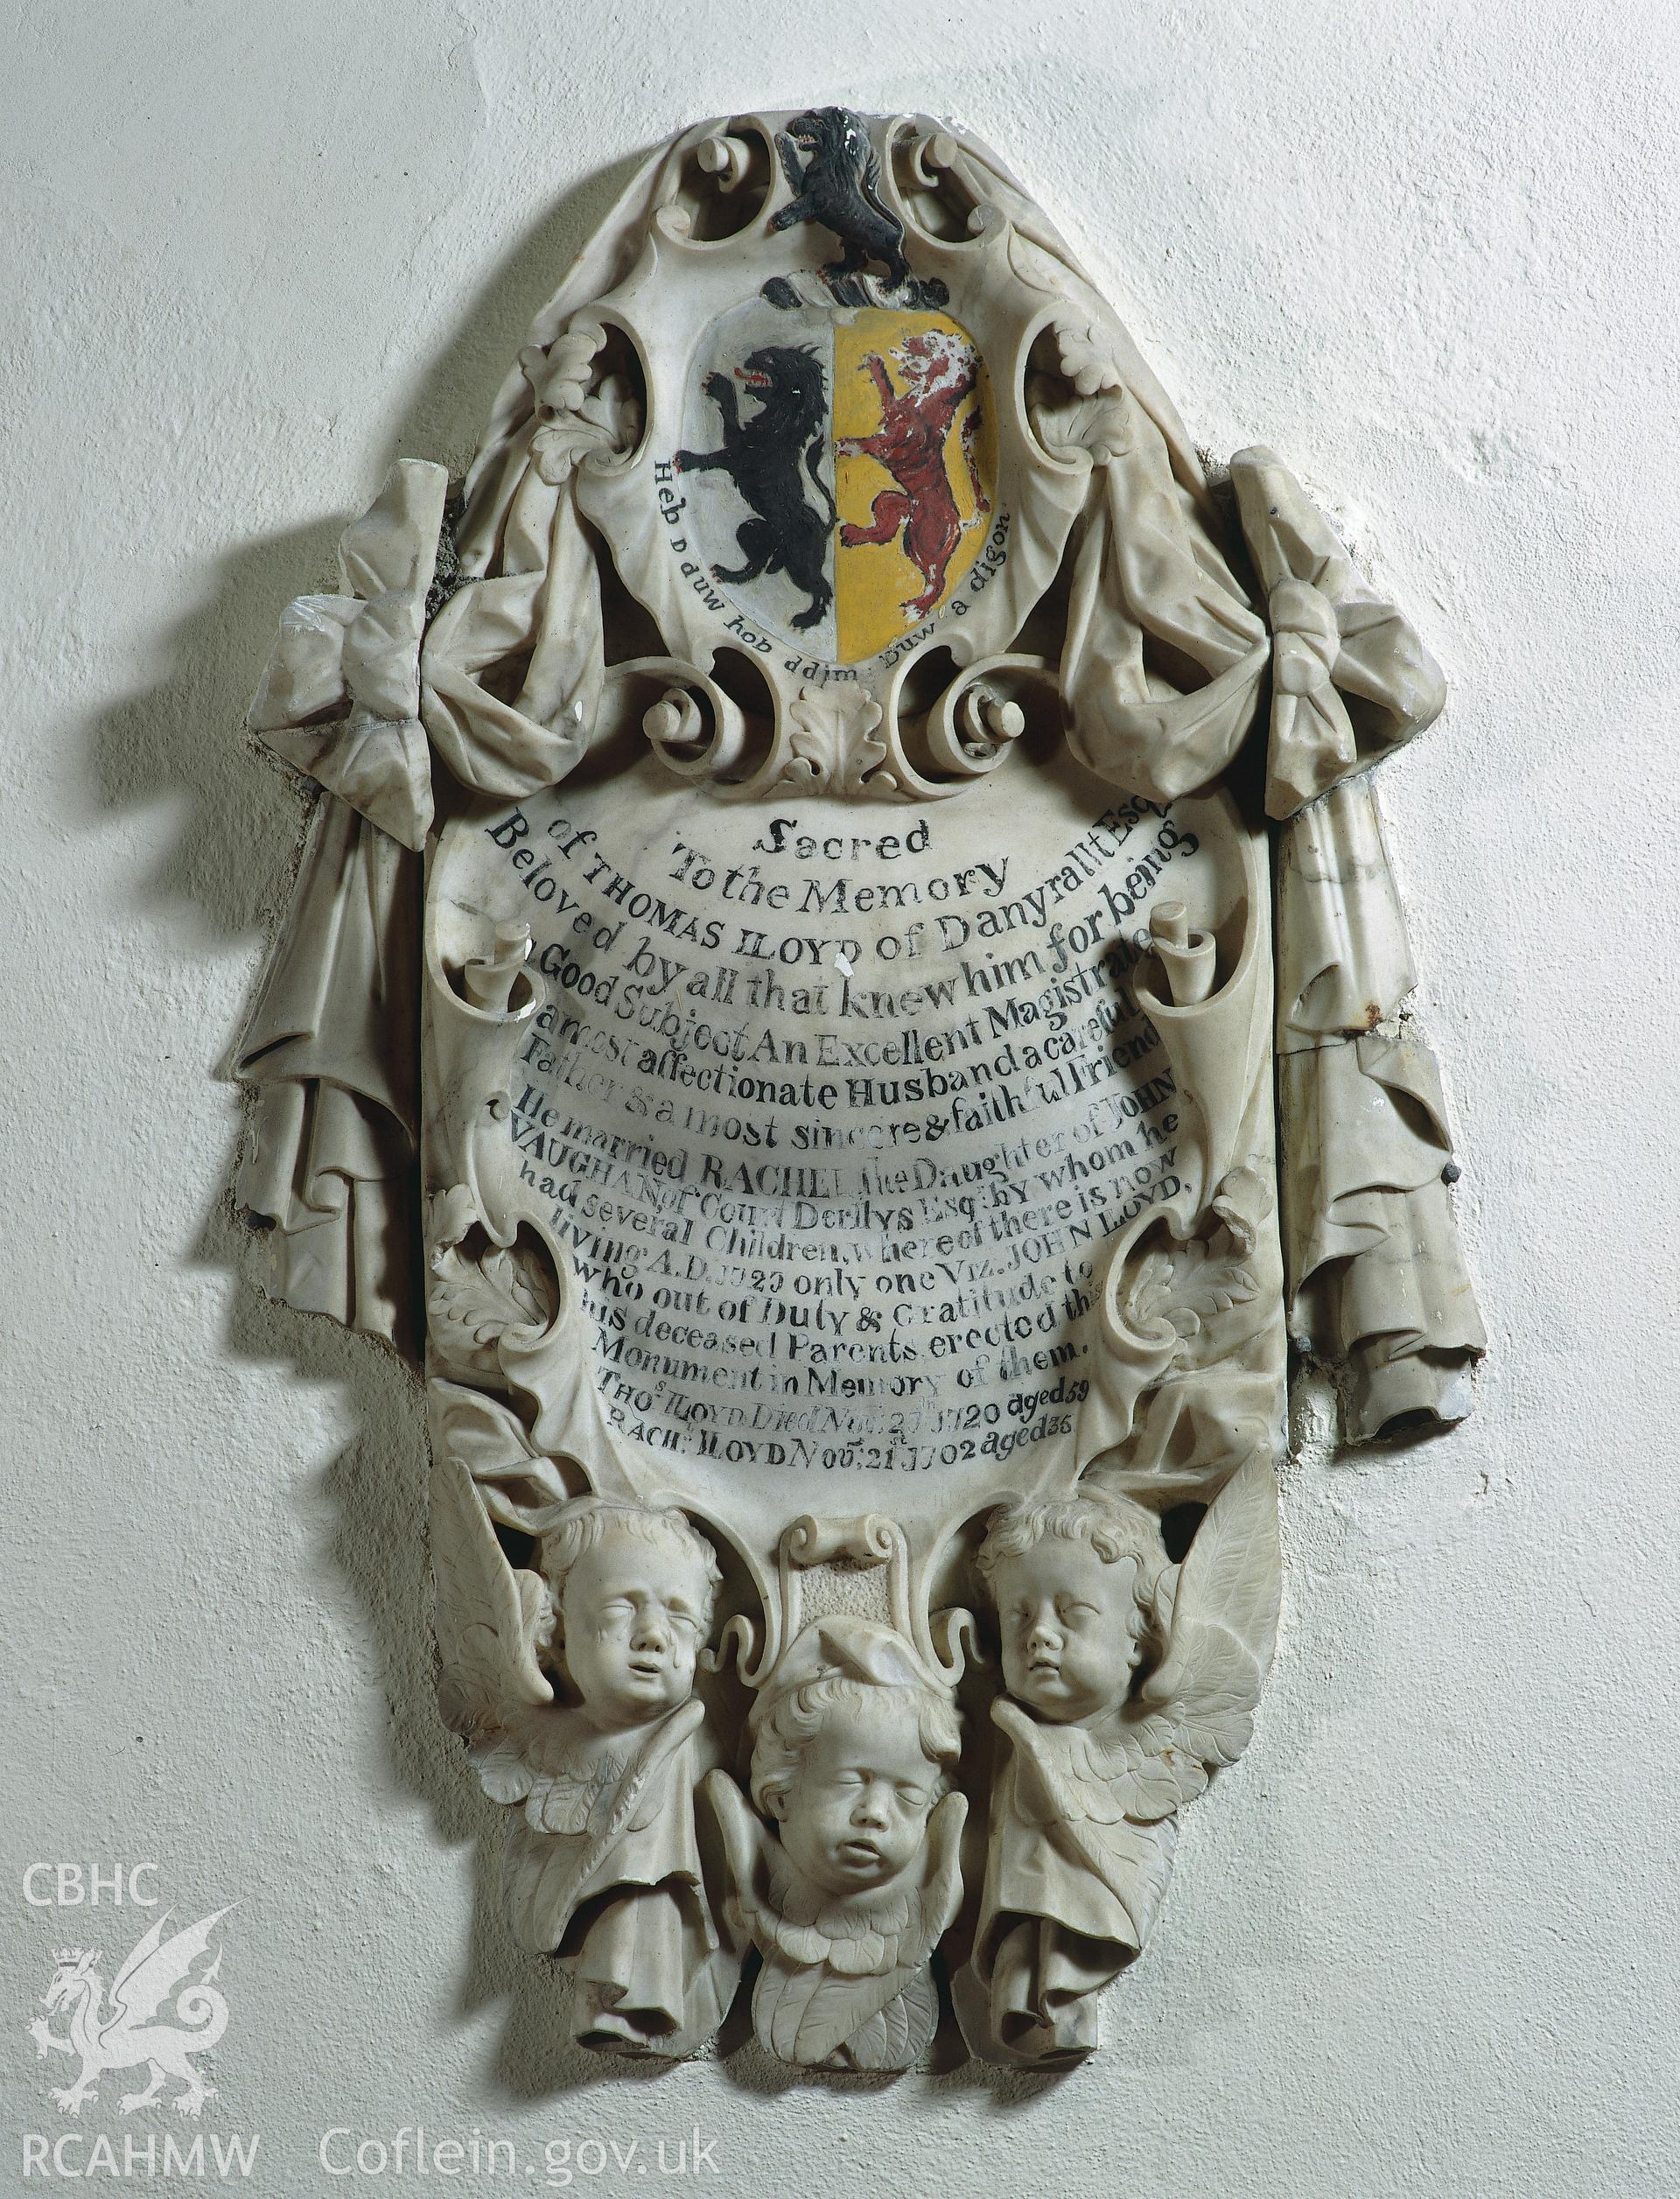 RCAHMW colour transparency showing memorial to T. Lloyd, in Llangadog Church